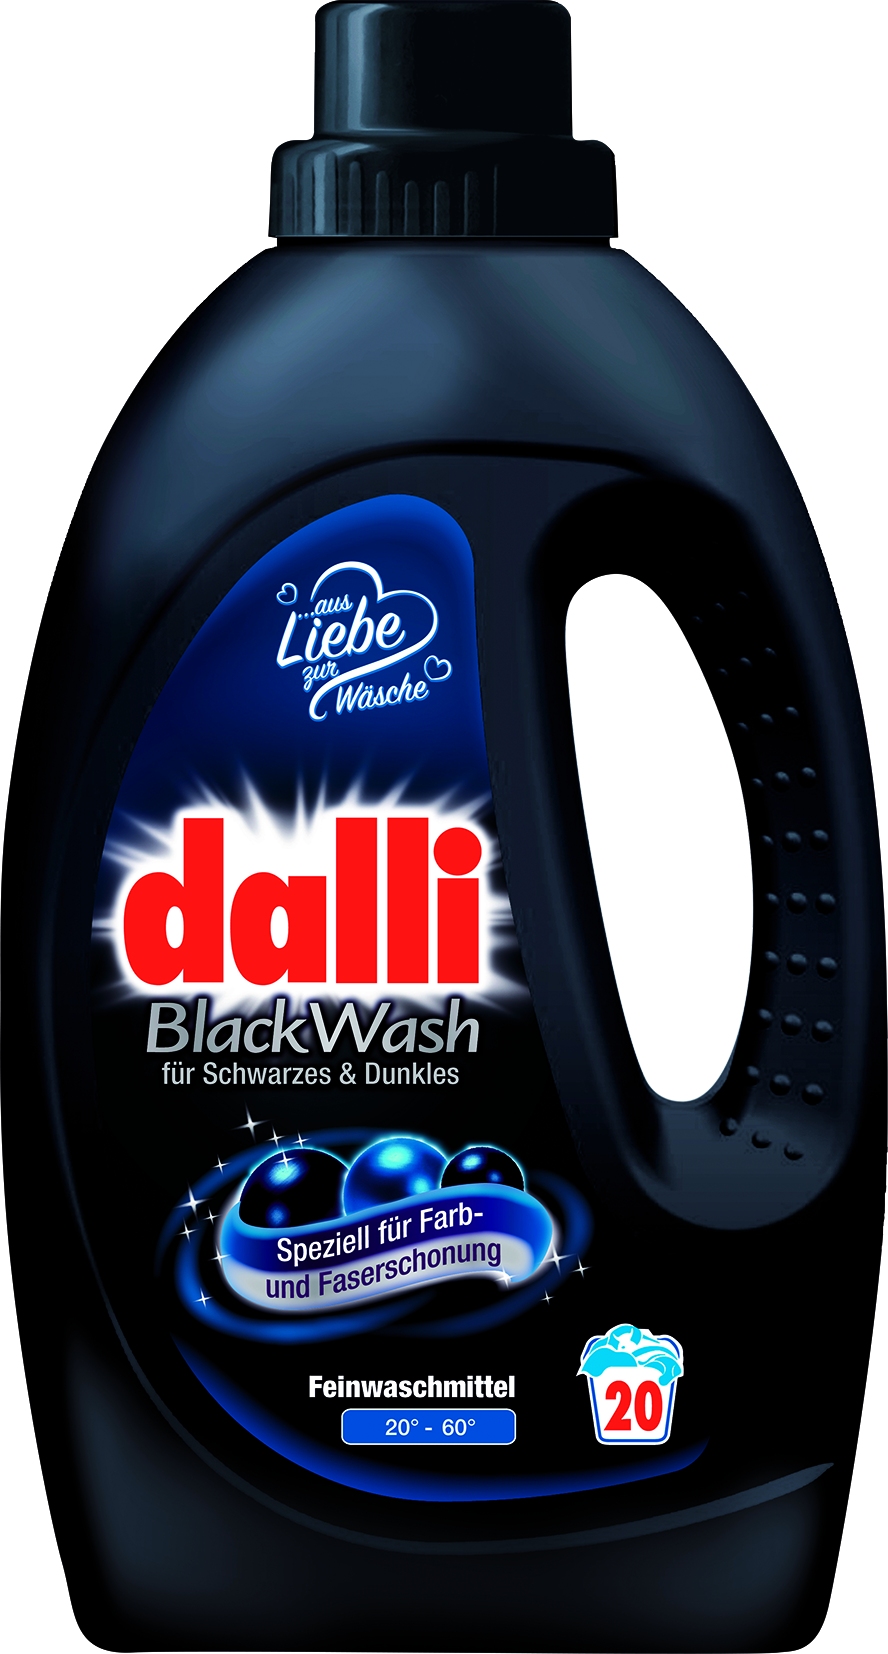 Black Wash   